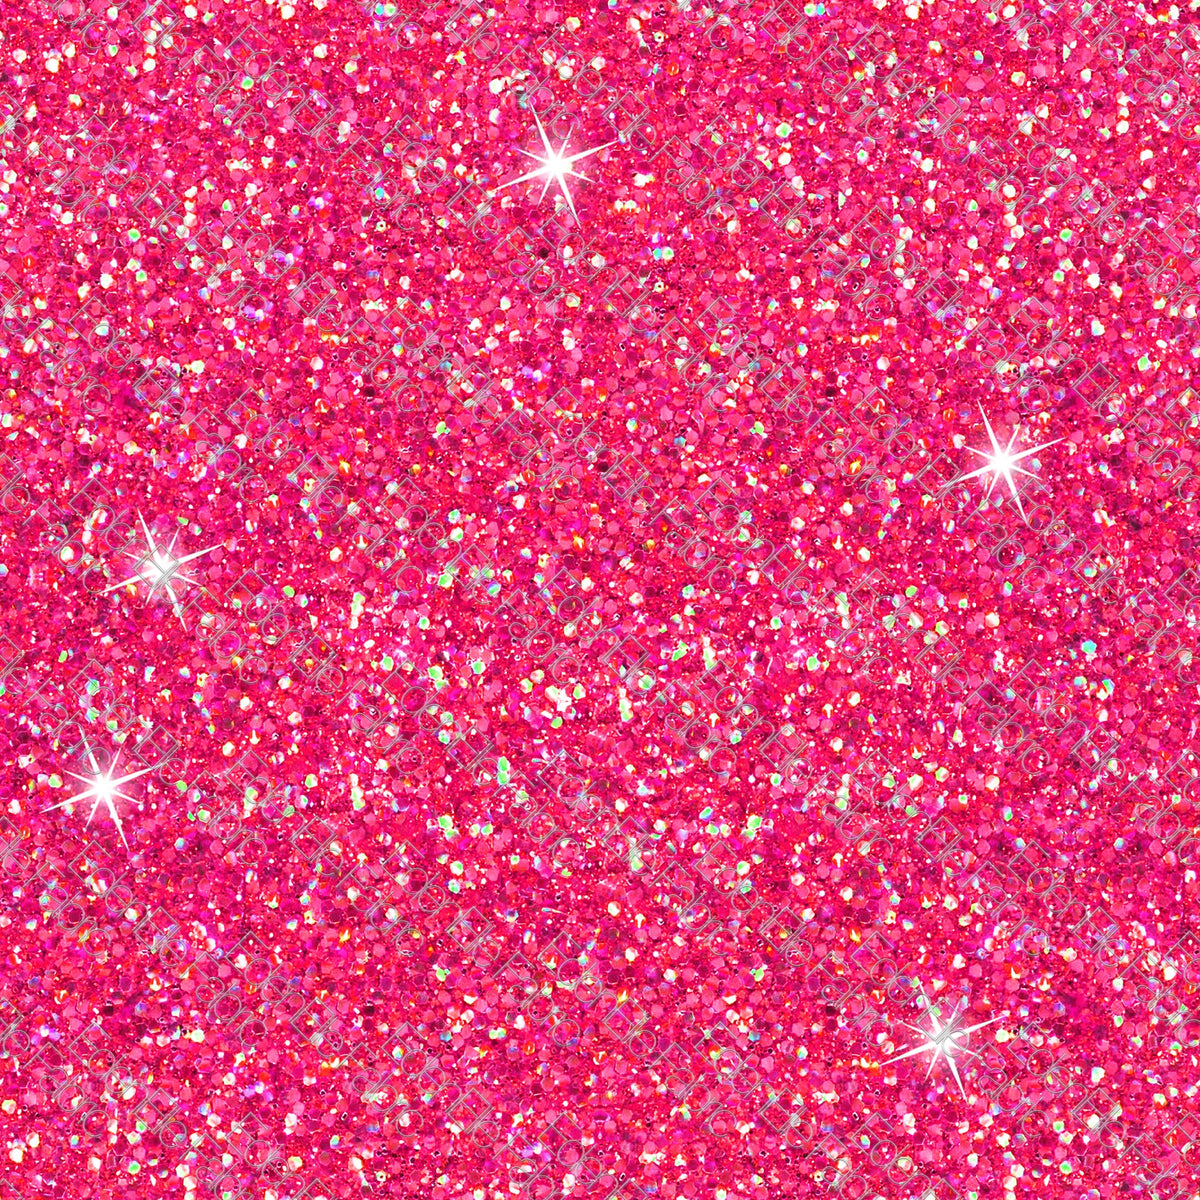 Hot Pink Glitter